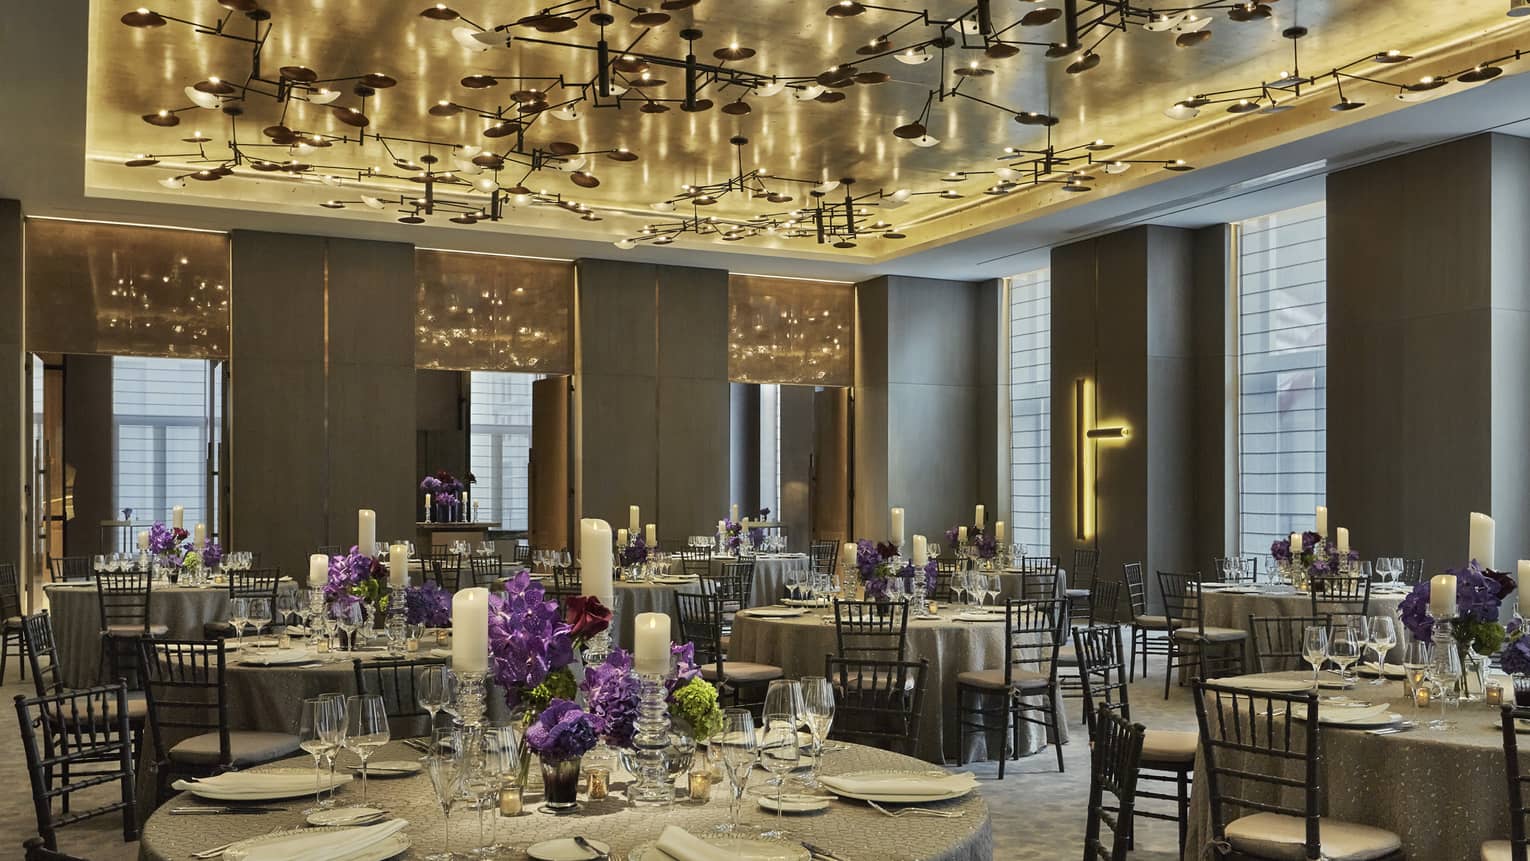 Round banquet dining tables with purple flower arrangements under modern ceiling, lights 